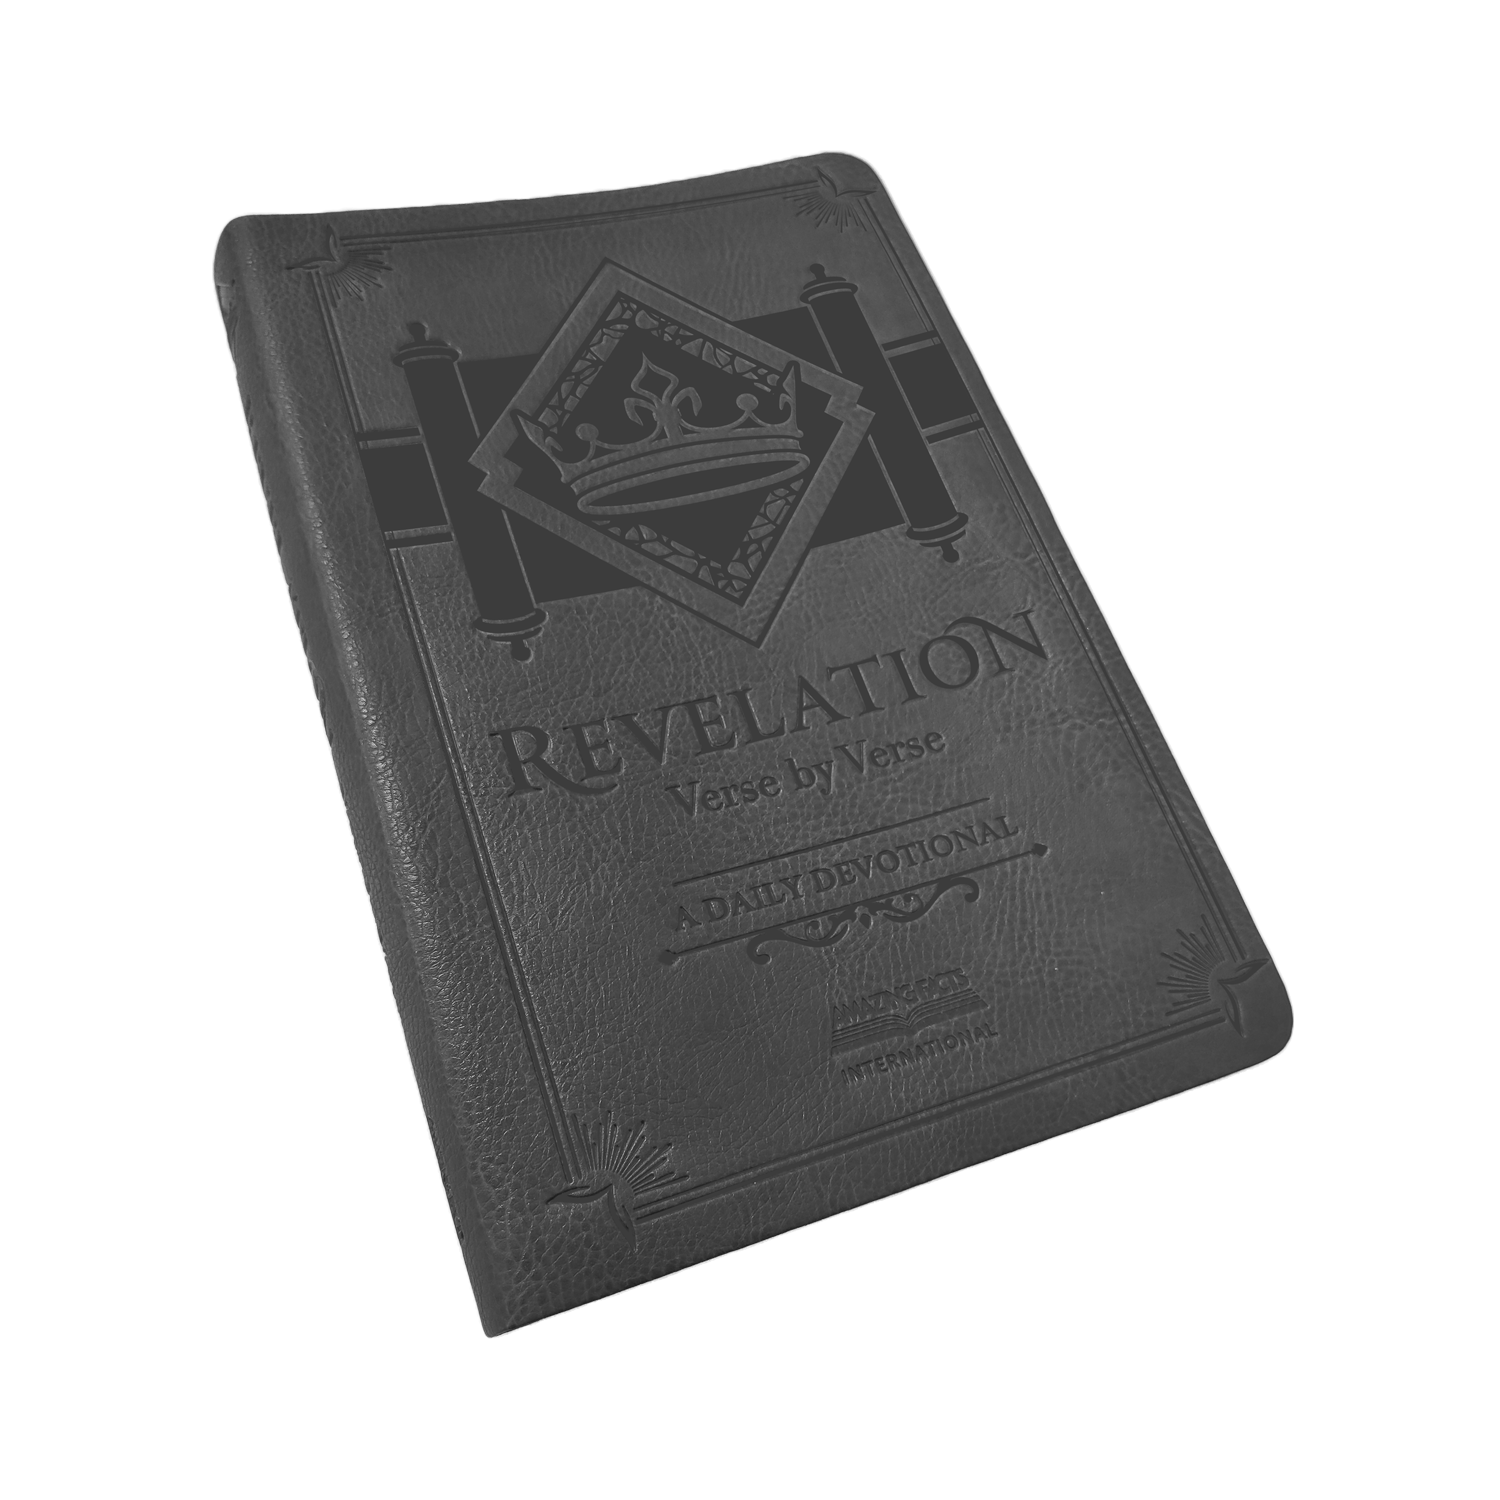 Revelation Verse by Verse: A Daily Devotional (Leathersoft Gray)